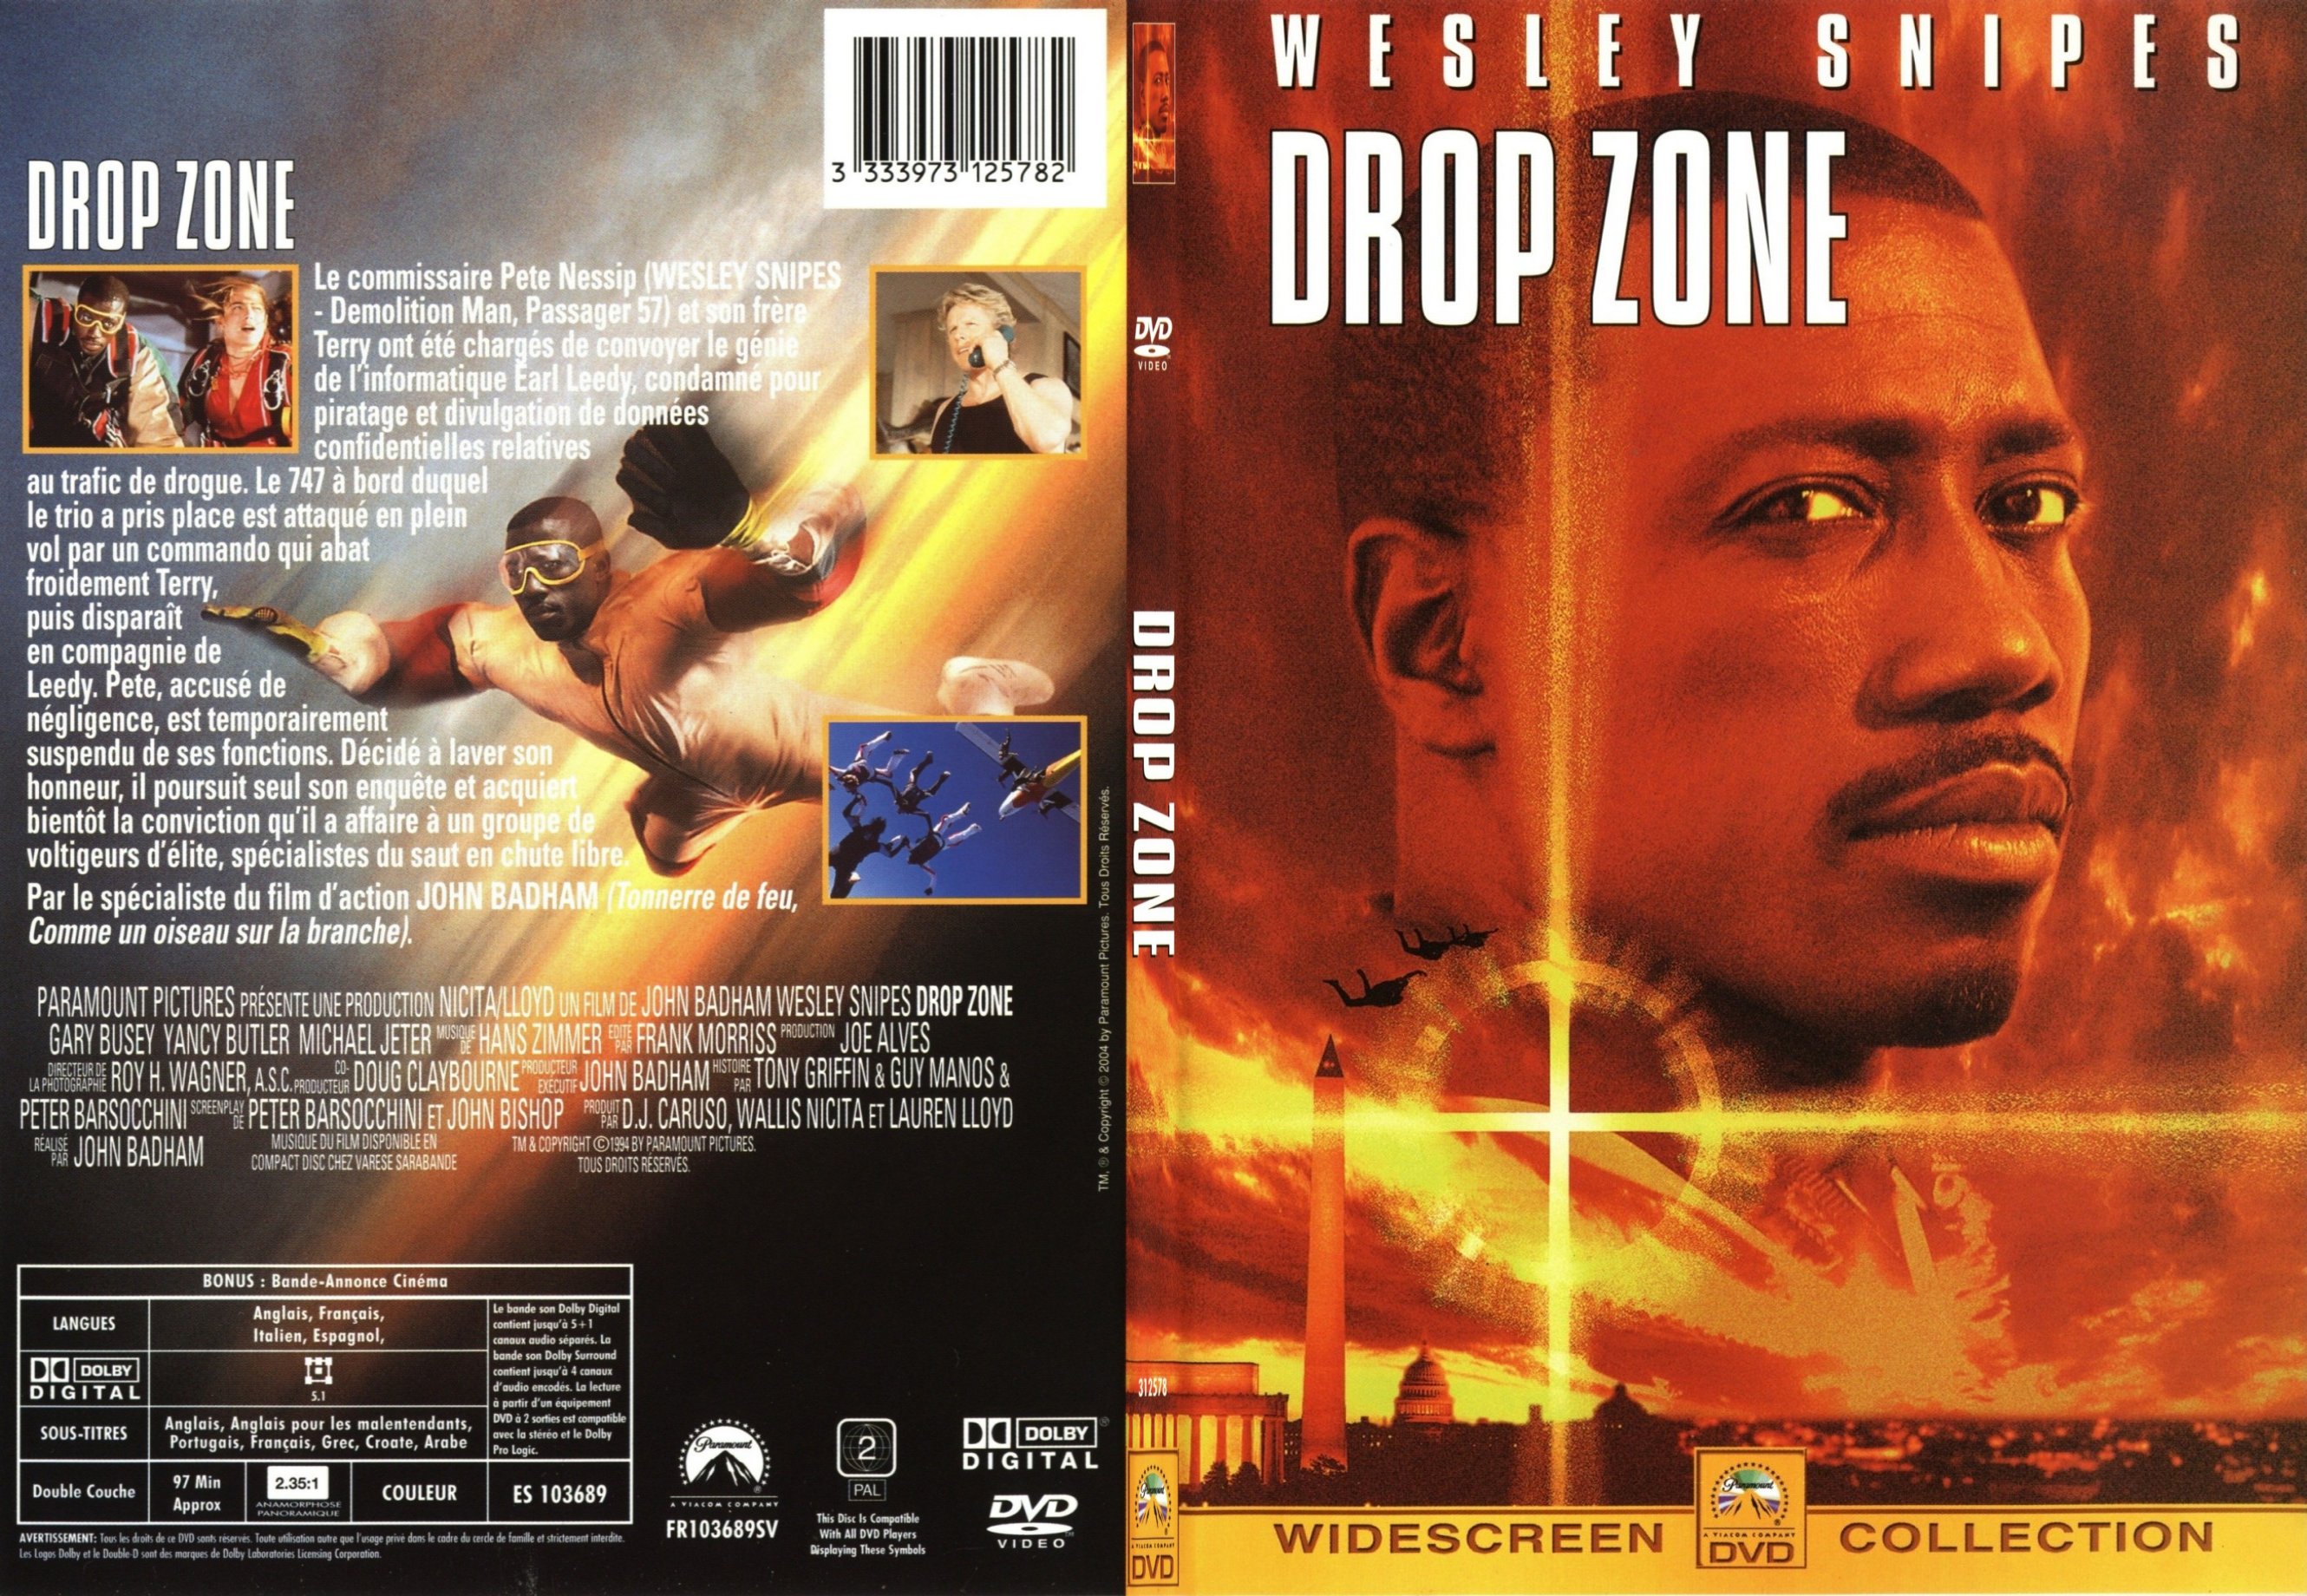 Jaquette DVD Drop zone - SLIM